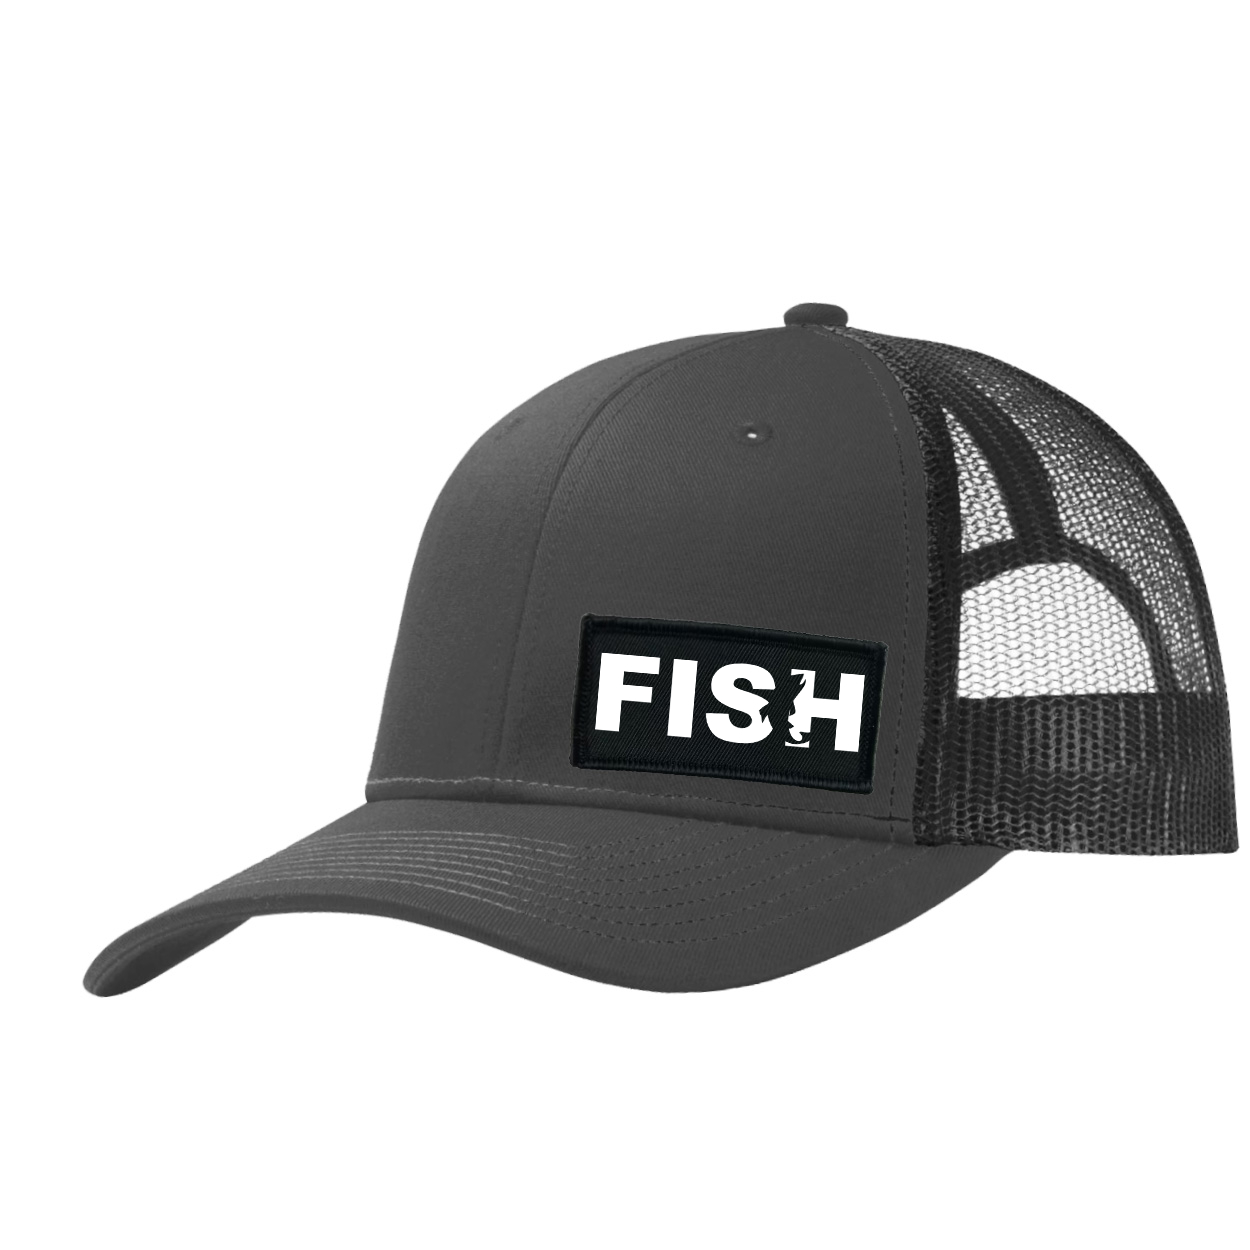 Fish Catch Logo Night Out Woven Patch Snapback Trucker Hat Dark Gray/Black (White Logo)